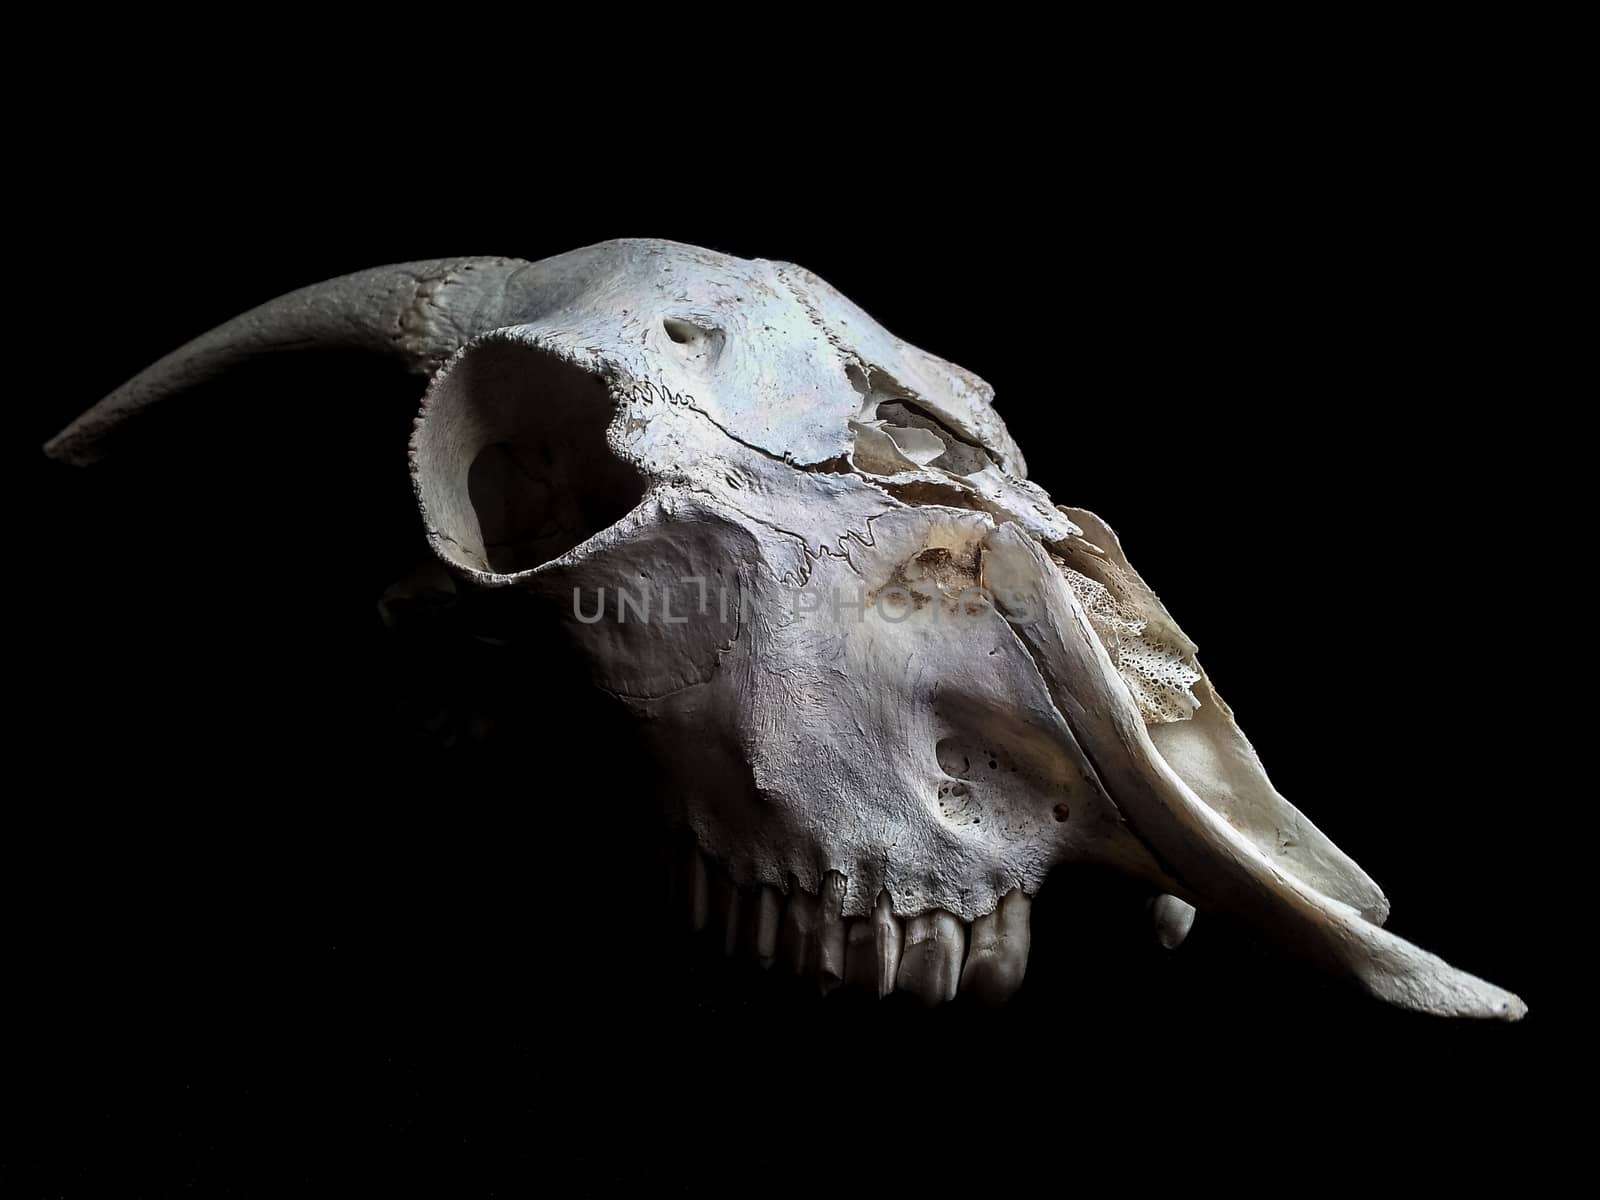 Goat skull by Arvebettum